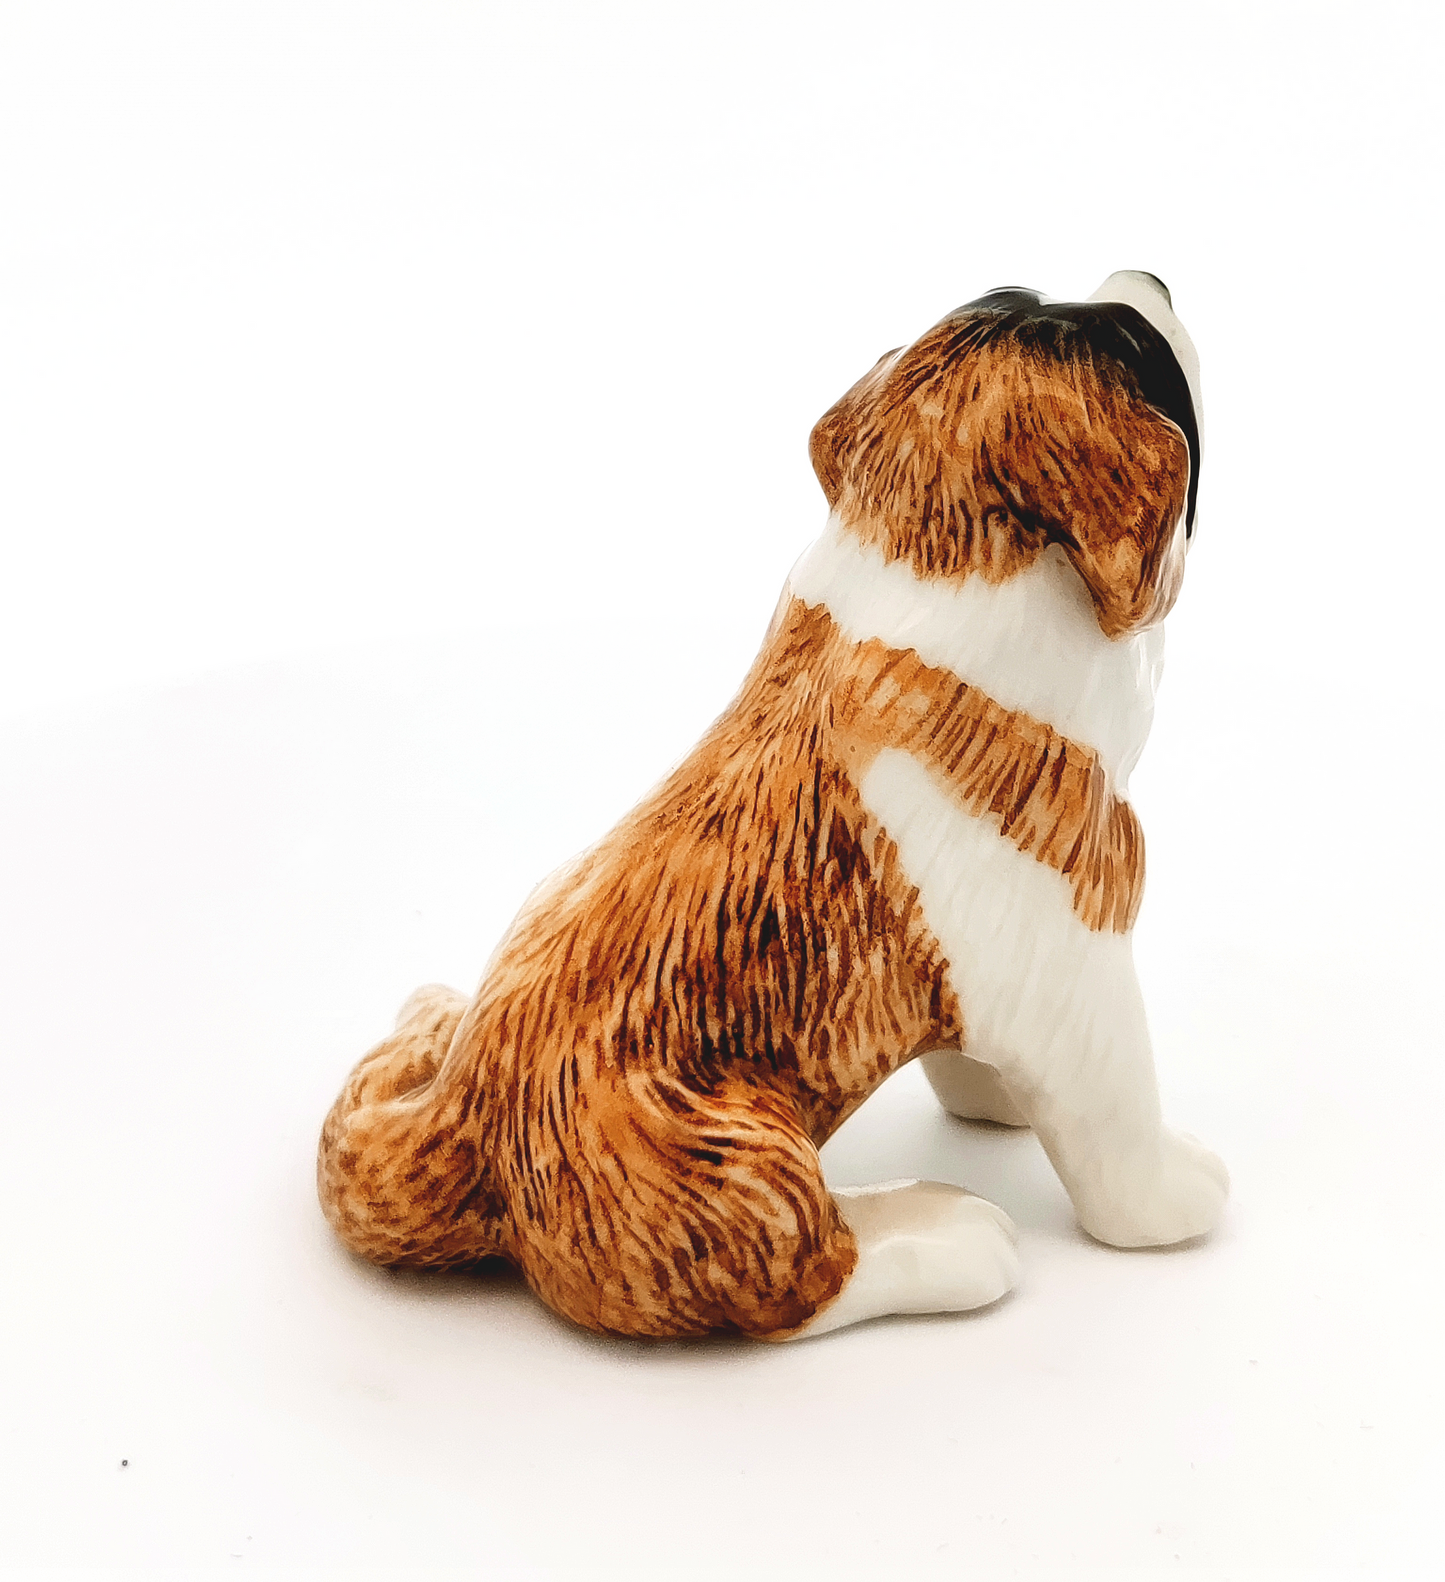 Saint Bernard Dog Ceramic Figurine Hand Painted Porcelain Gift Collectible DecorHandmade Miniatures Cerami Figurine Animals Decor Collection